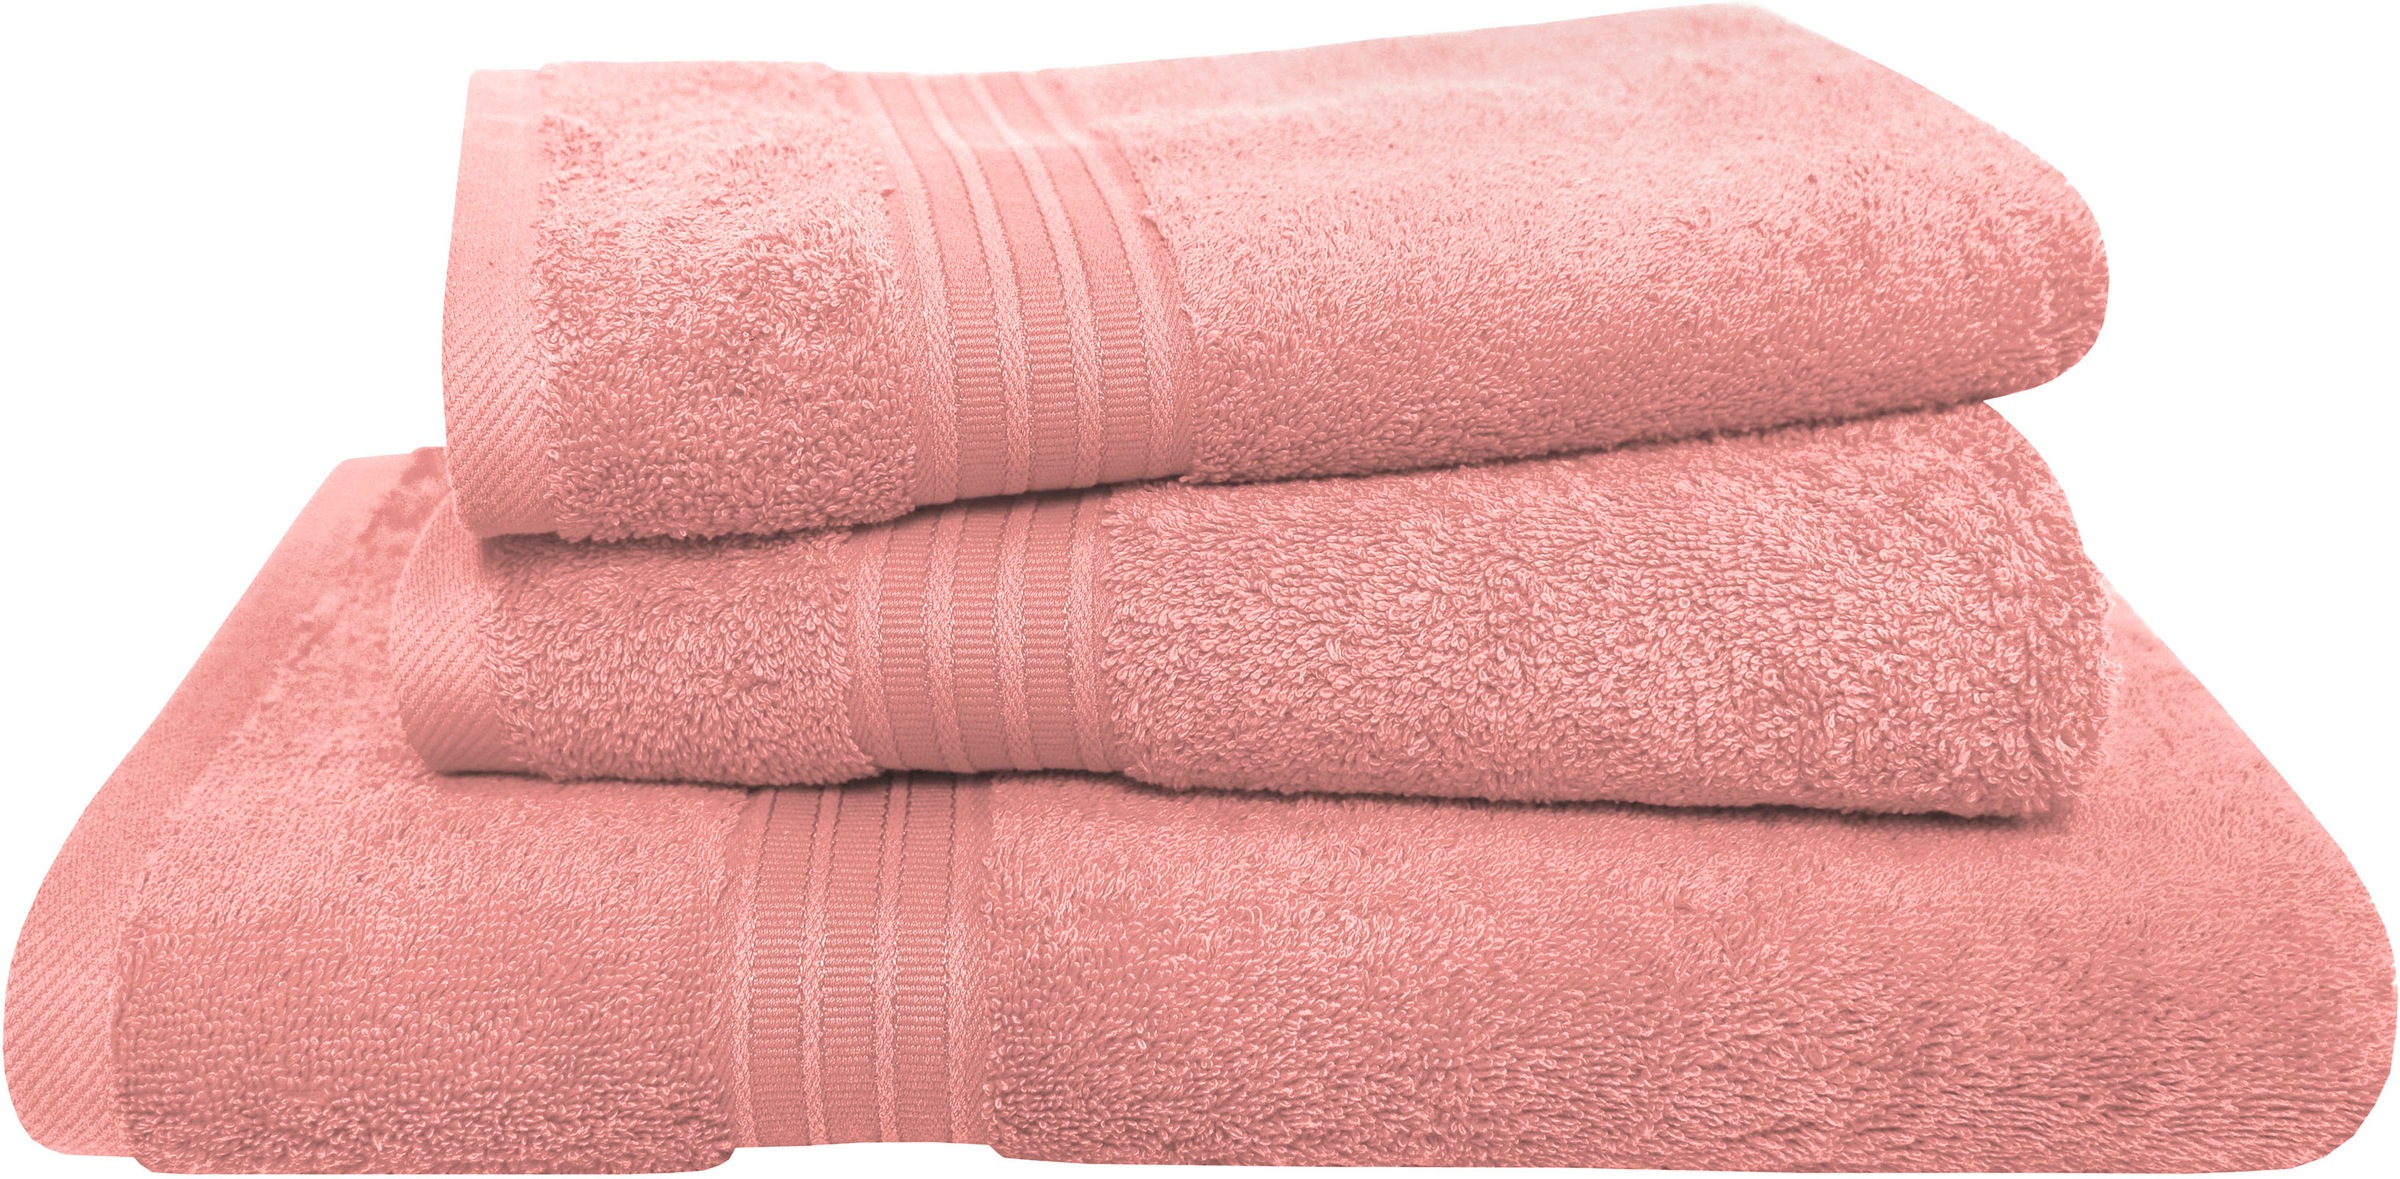 Handtuchsets aus Holz Preisvergleich | Moebel 24 | Handtuch-Sets